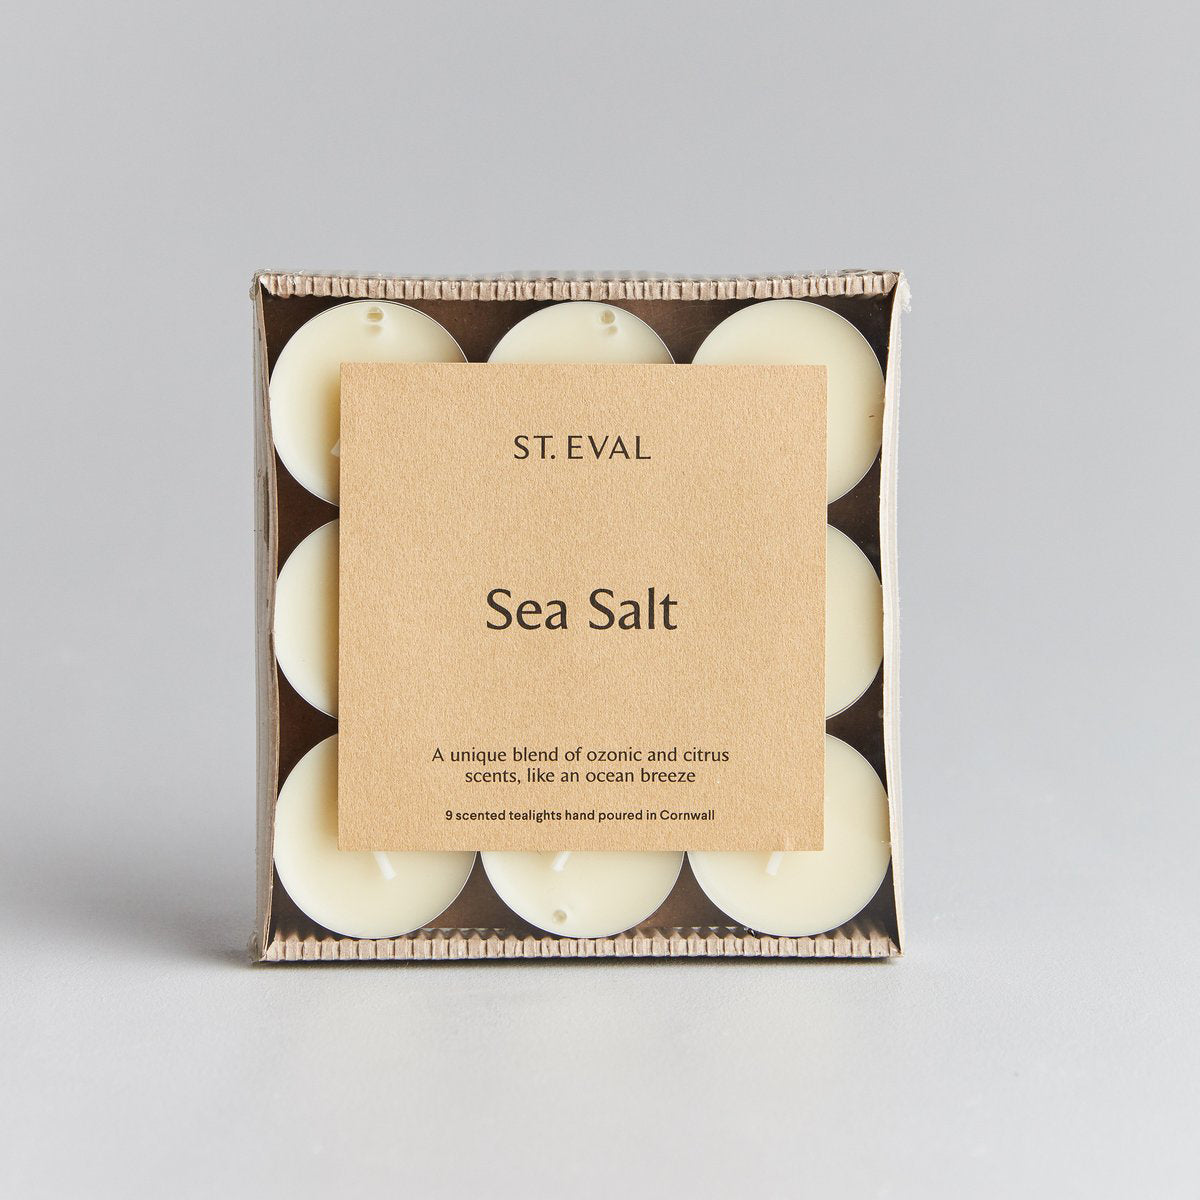 St-Eval-sea-salt-scented-tealights-candles-pack-of-9